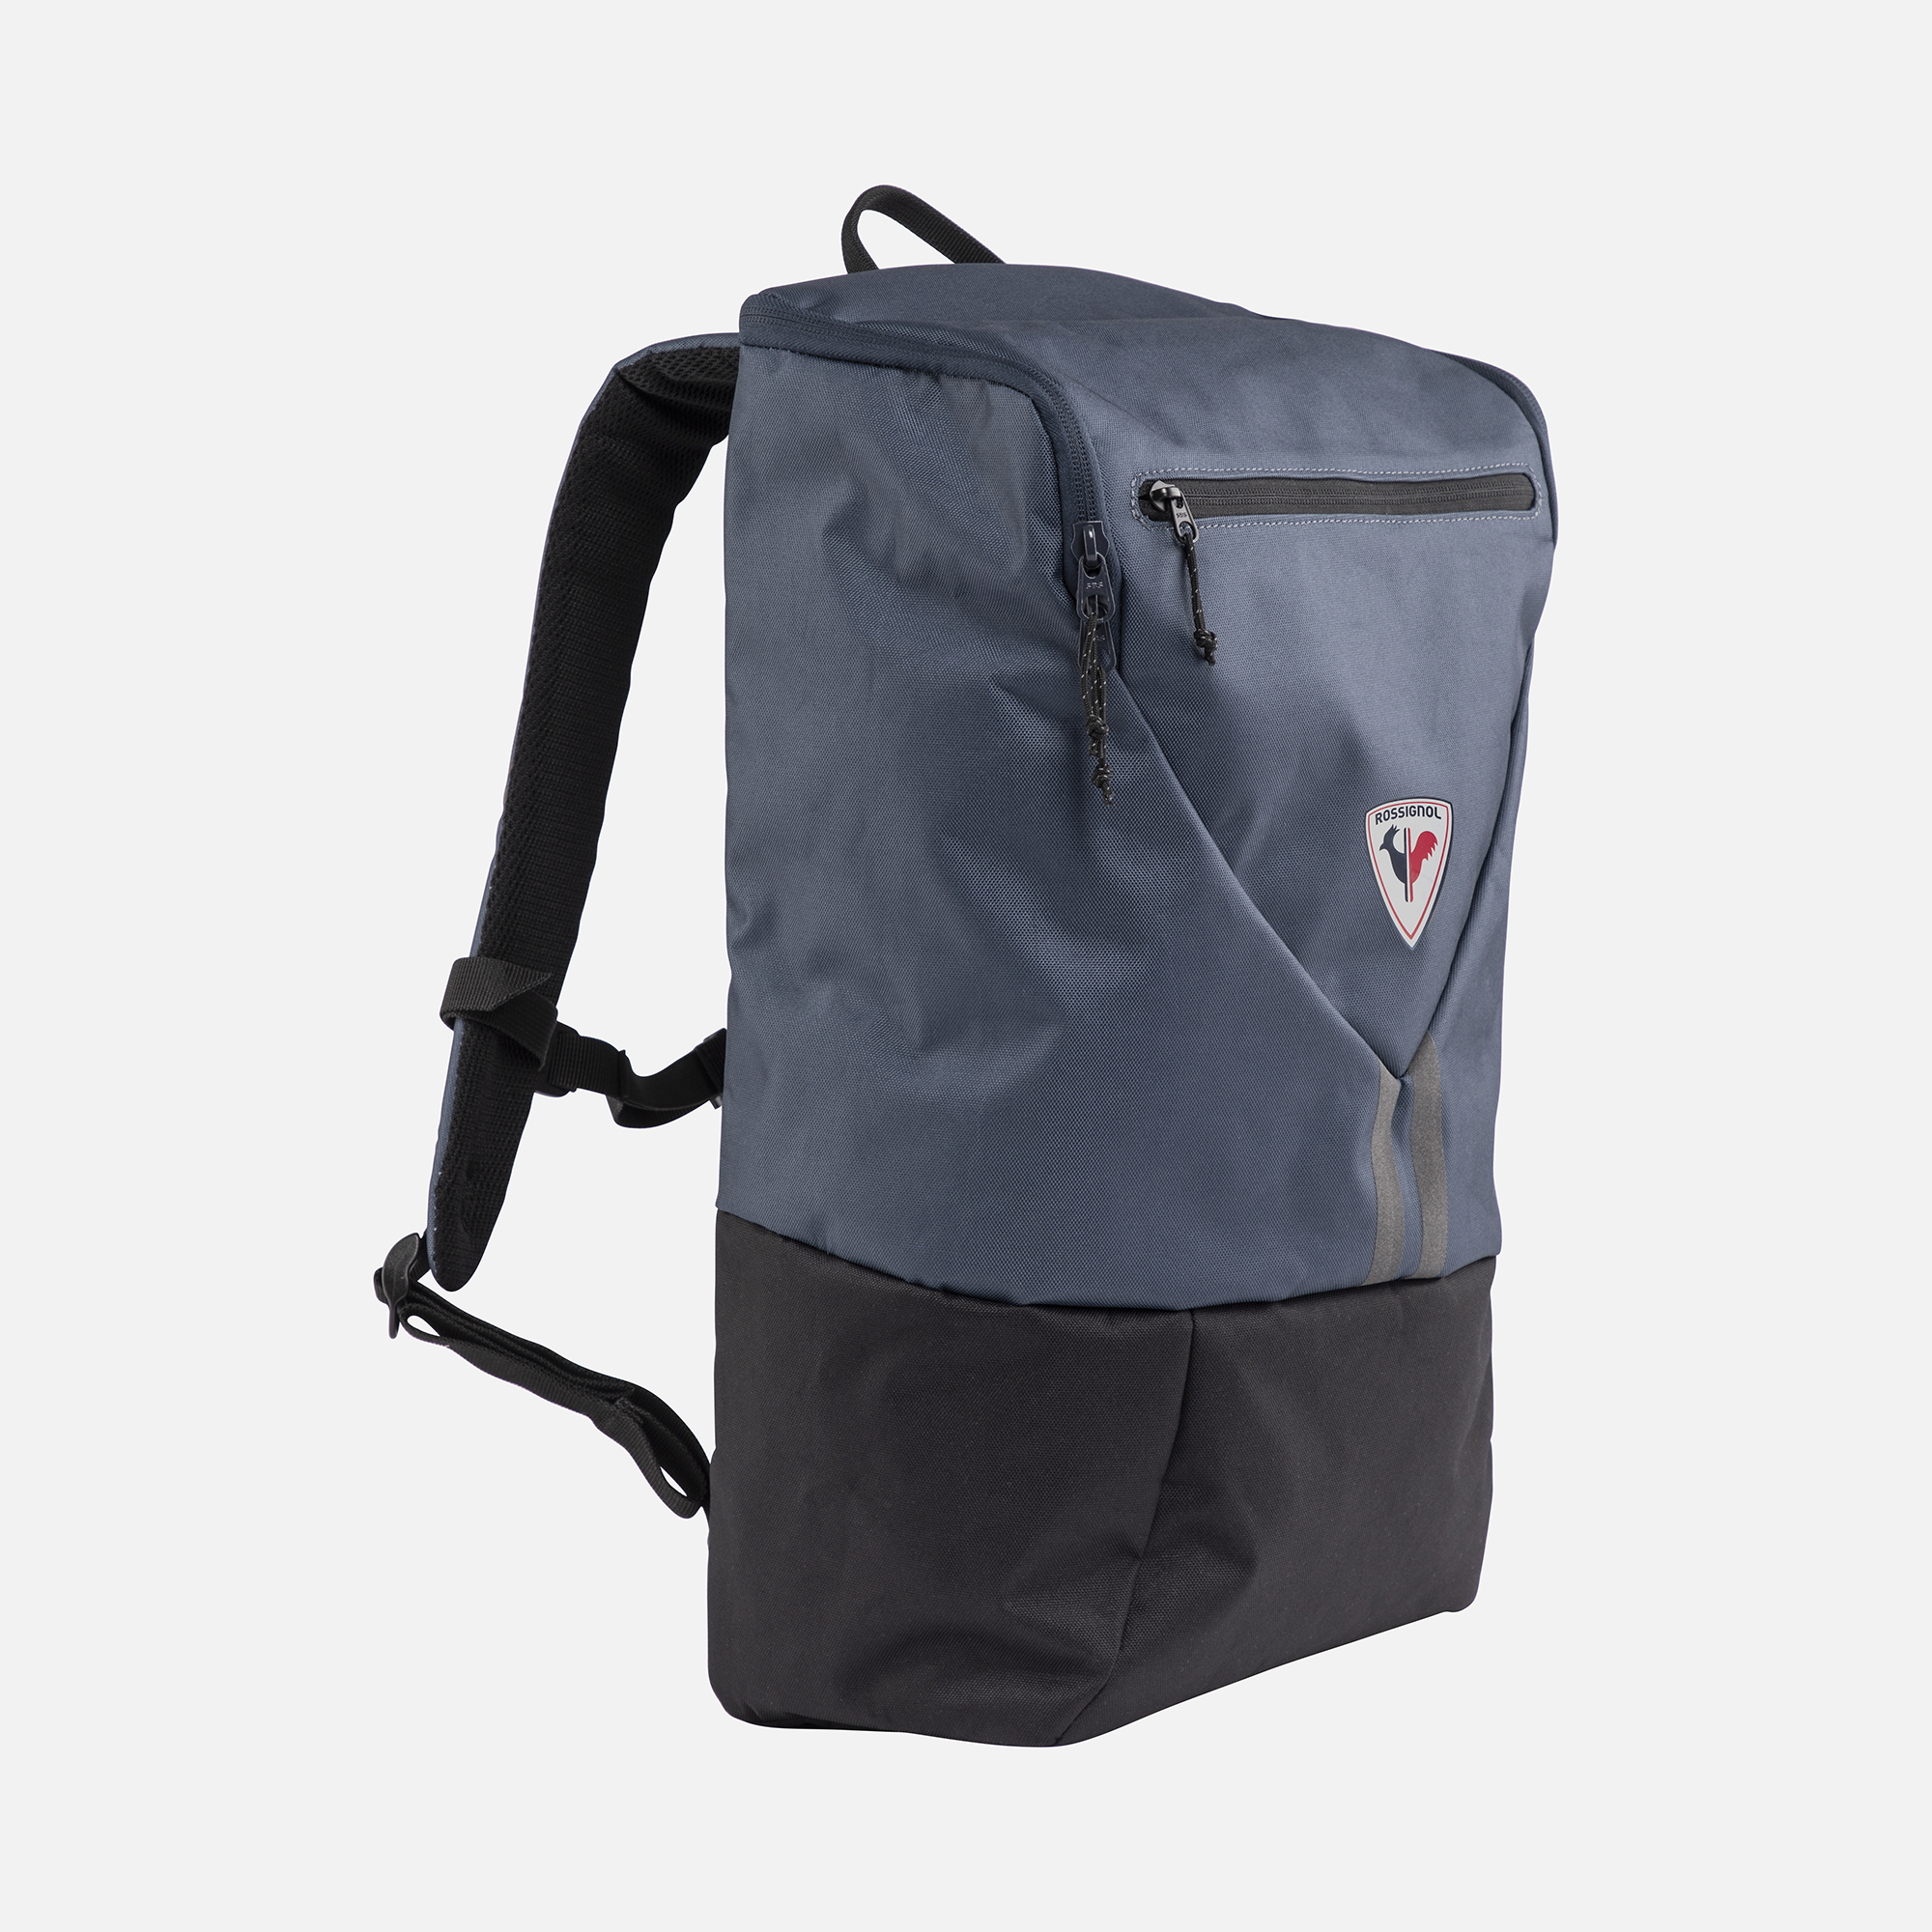 Unisex Commuters Backtoschool backpack 20L